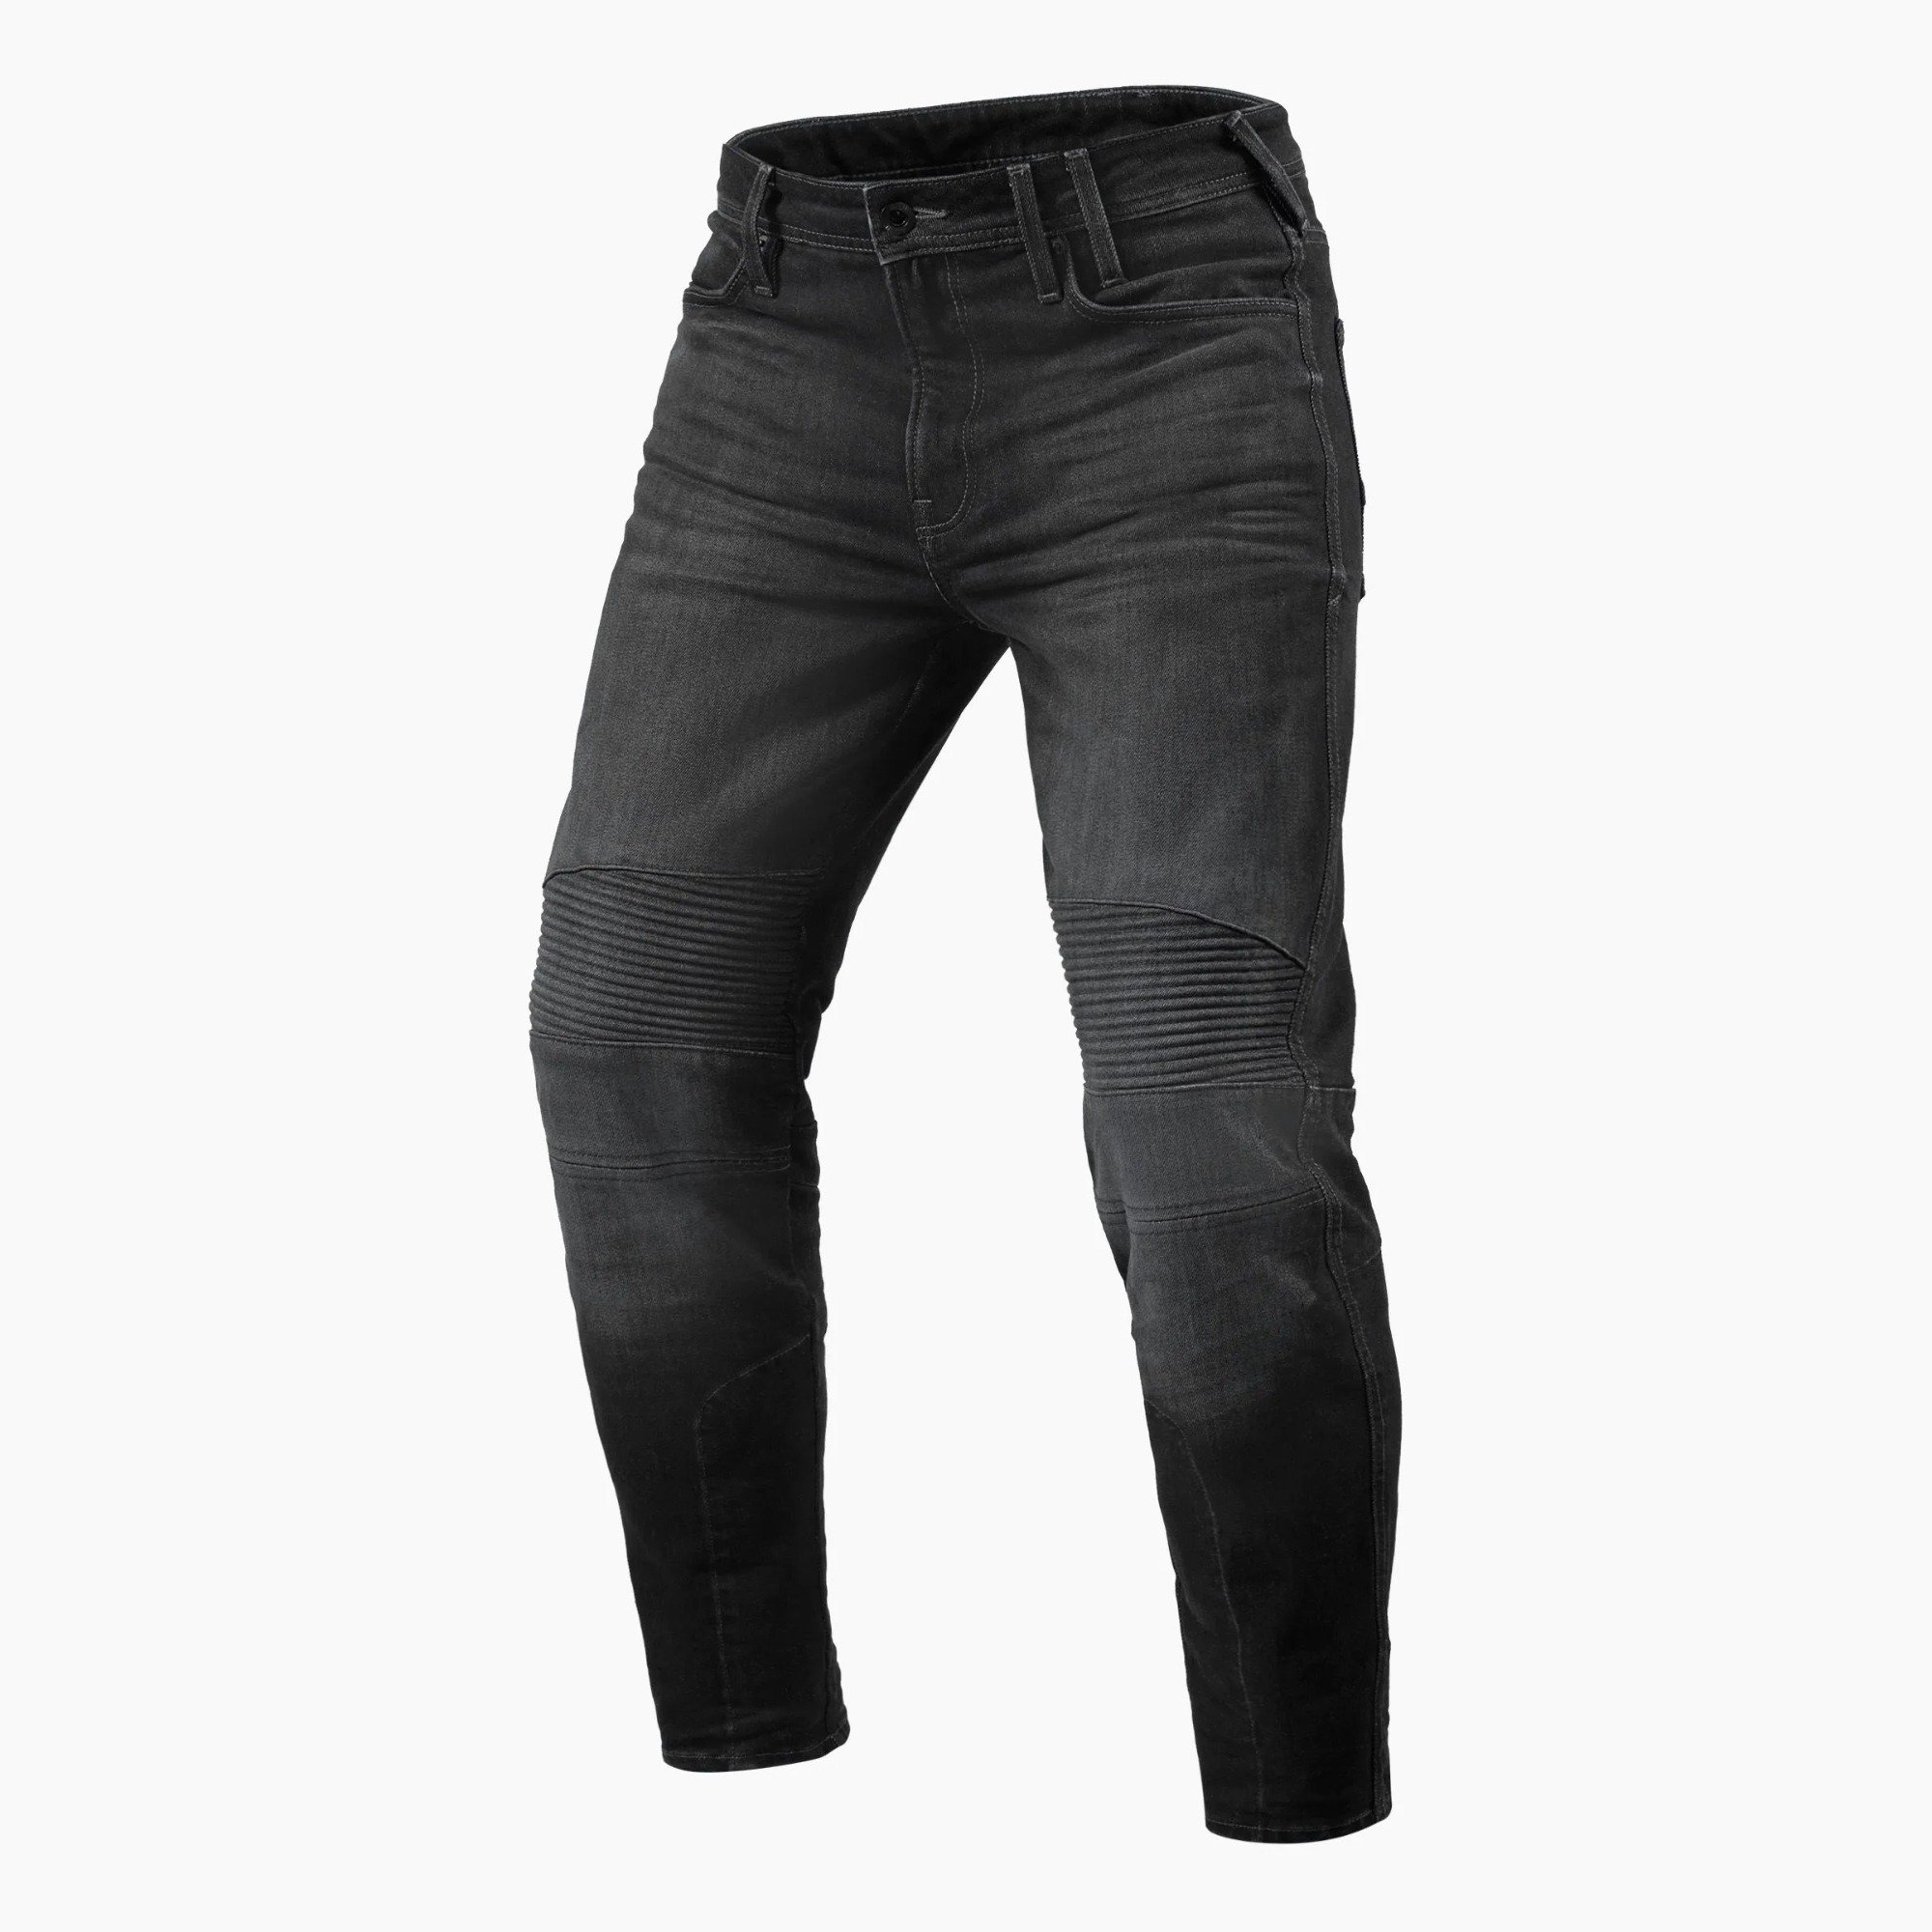 Image of REV'IT! Jeans Moto 2 TF Dark Grey Used Motorcycle Jeans Talla L32/W28